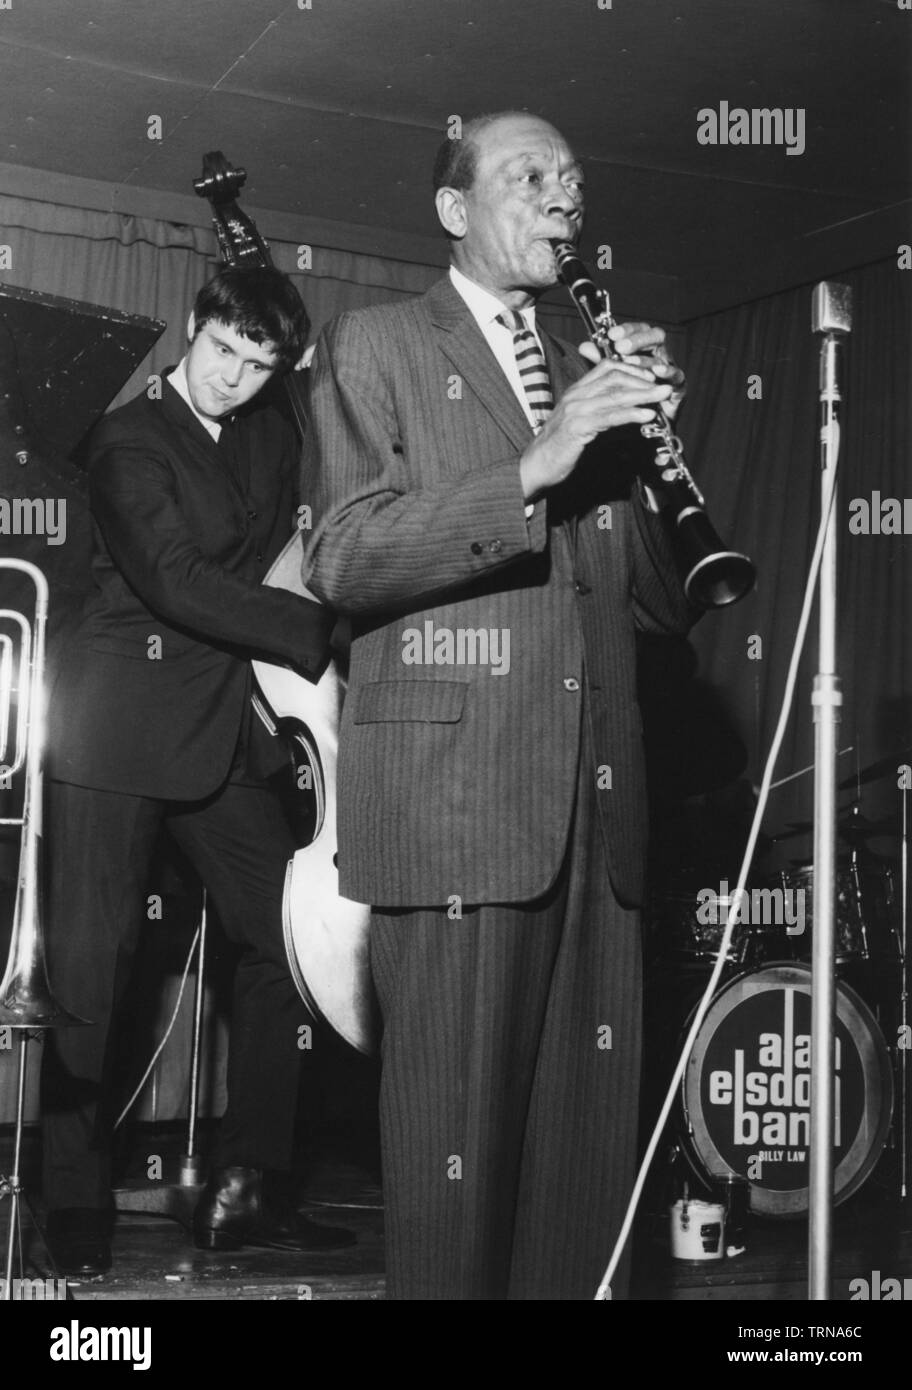 Edmond Hall, Mick Gilligan and the Alan Elsdon Band, 1966. Creator: Brian Foskett. Stock Photo